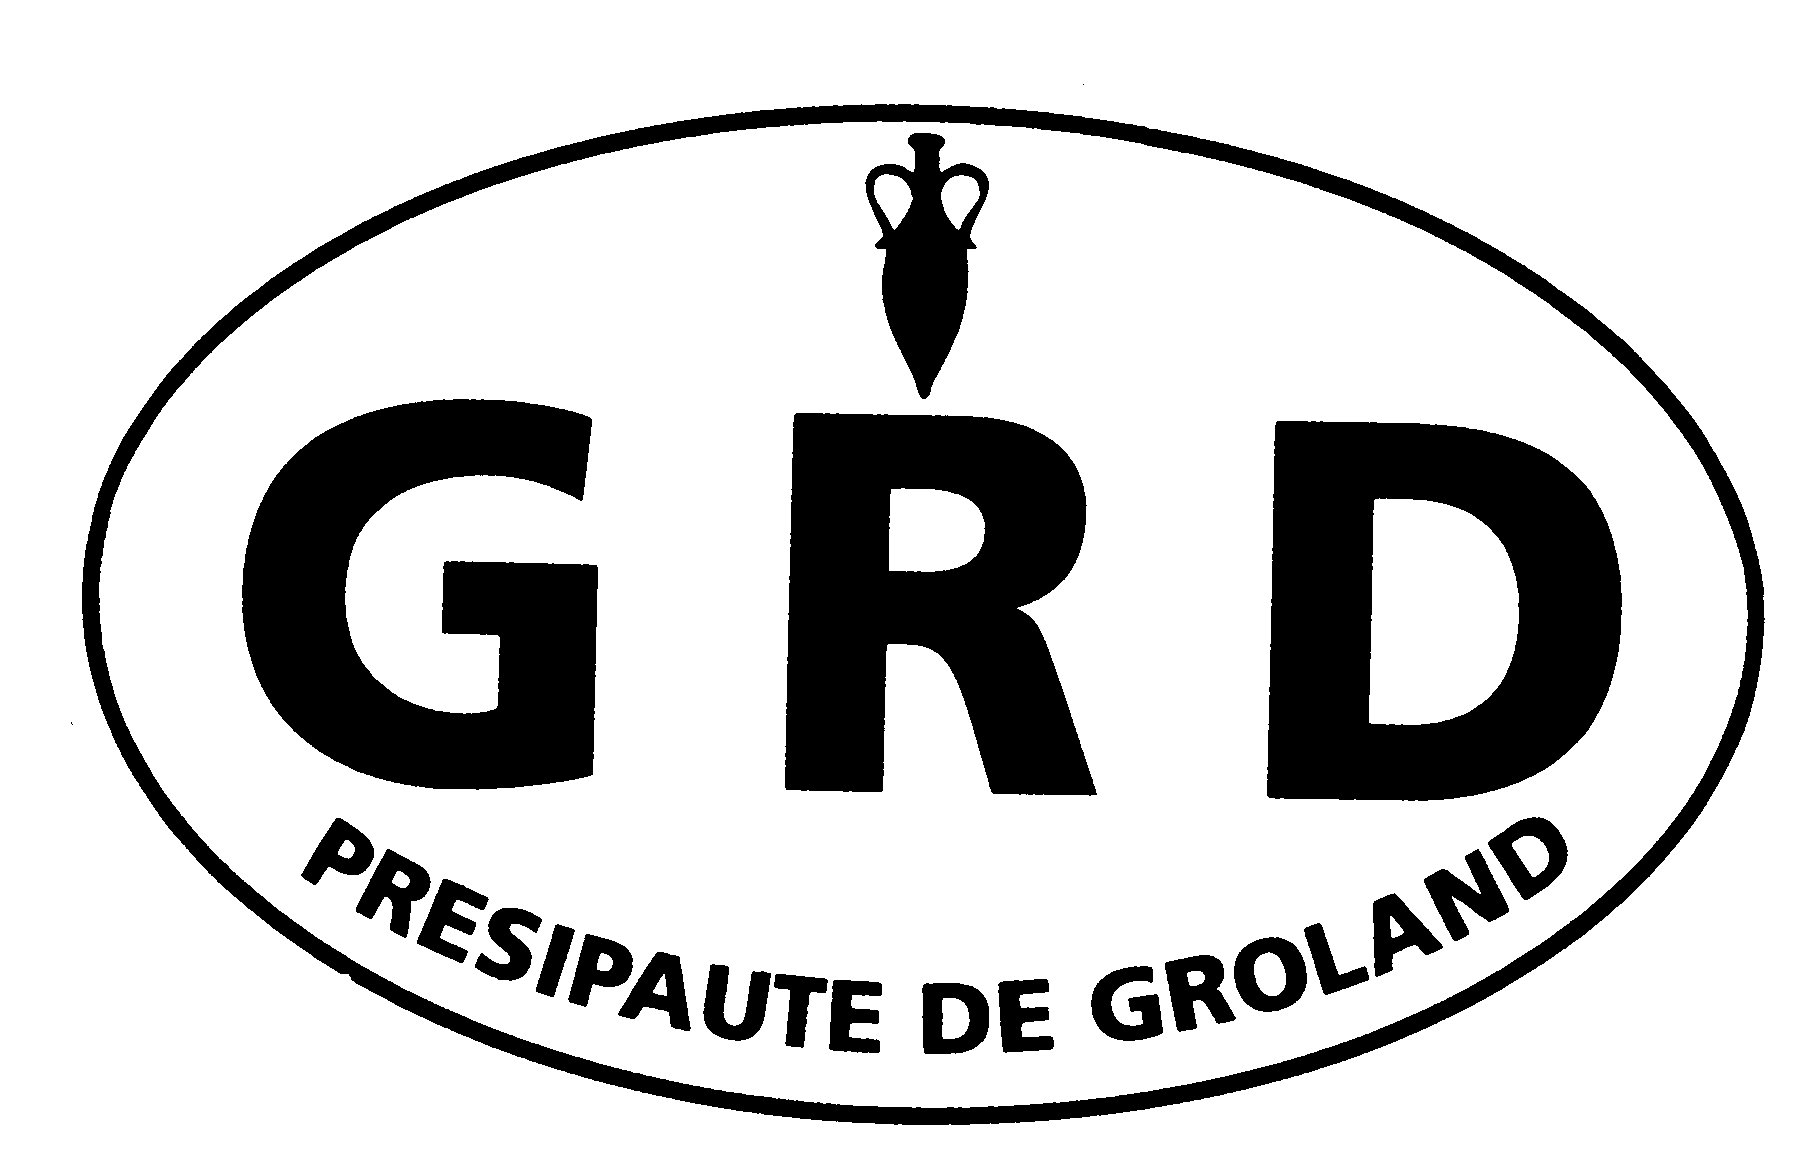 http://nicolinux.fr/wp-content/2008/10/groland-logo1.jpg